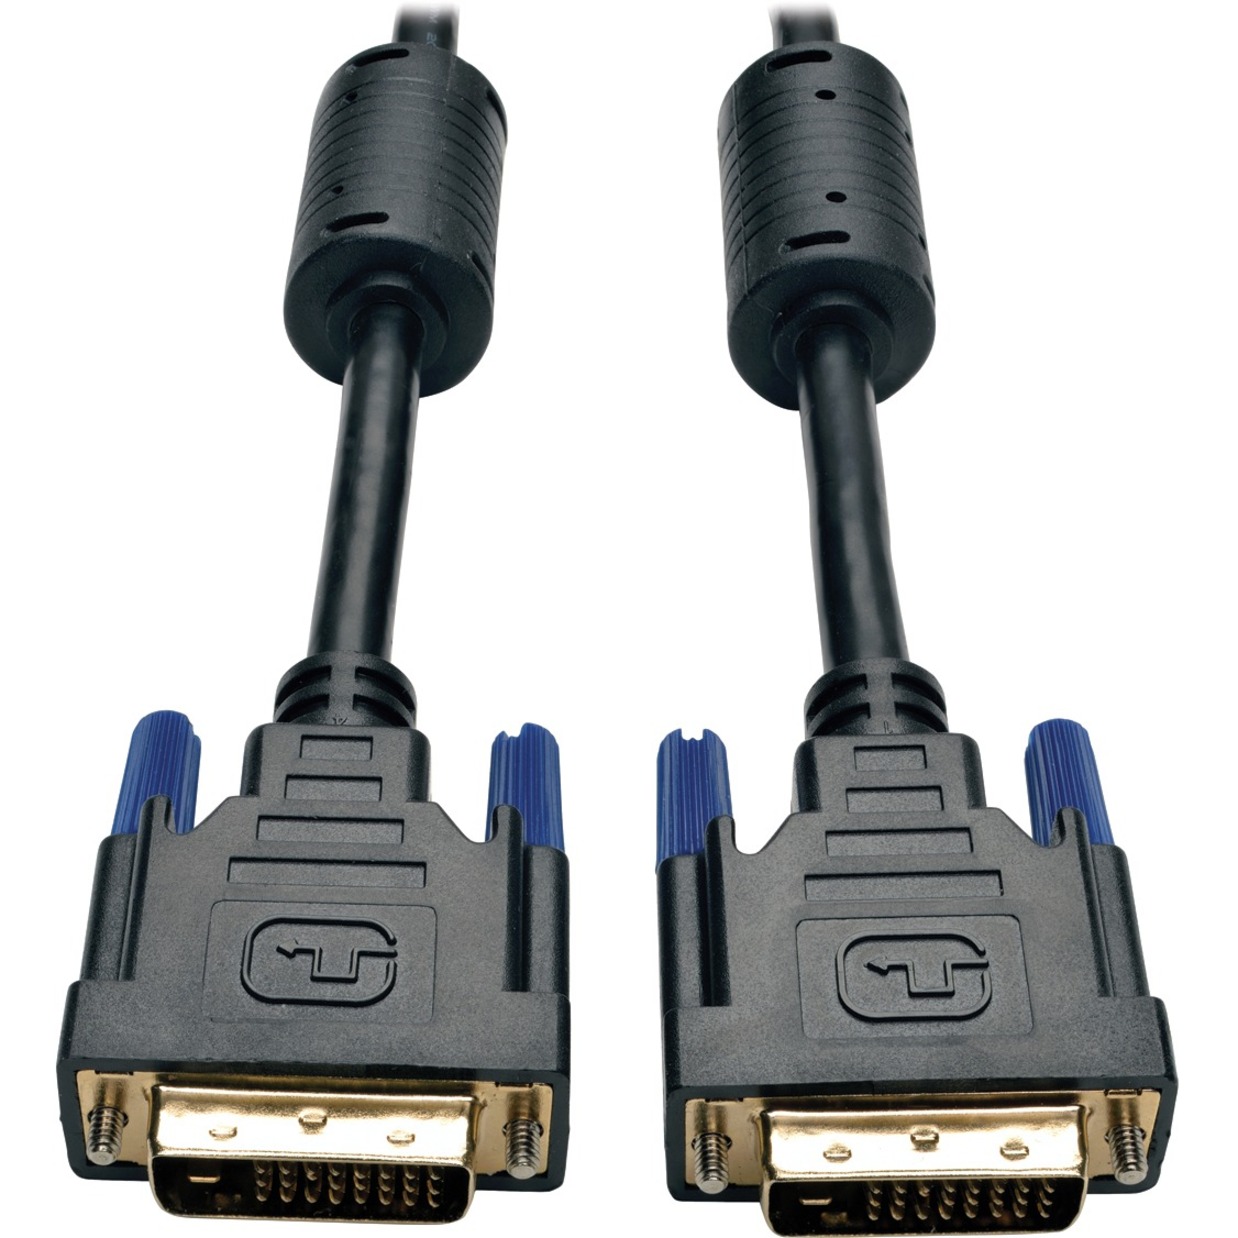 Tripp Lite P560-100-HD DVI High Definition Dual Link Digital TMDS Monitor Cable (DVI-D M/M), 100-ft. - image 1 of 2